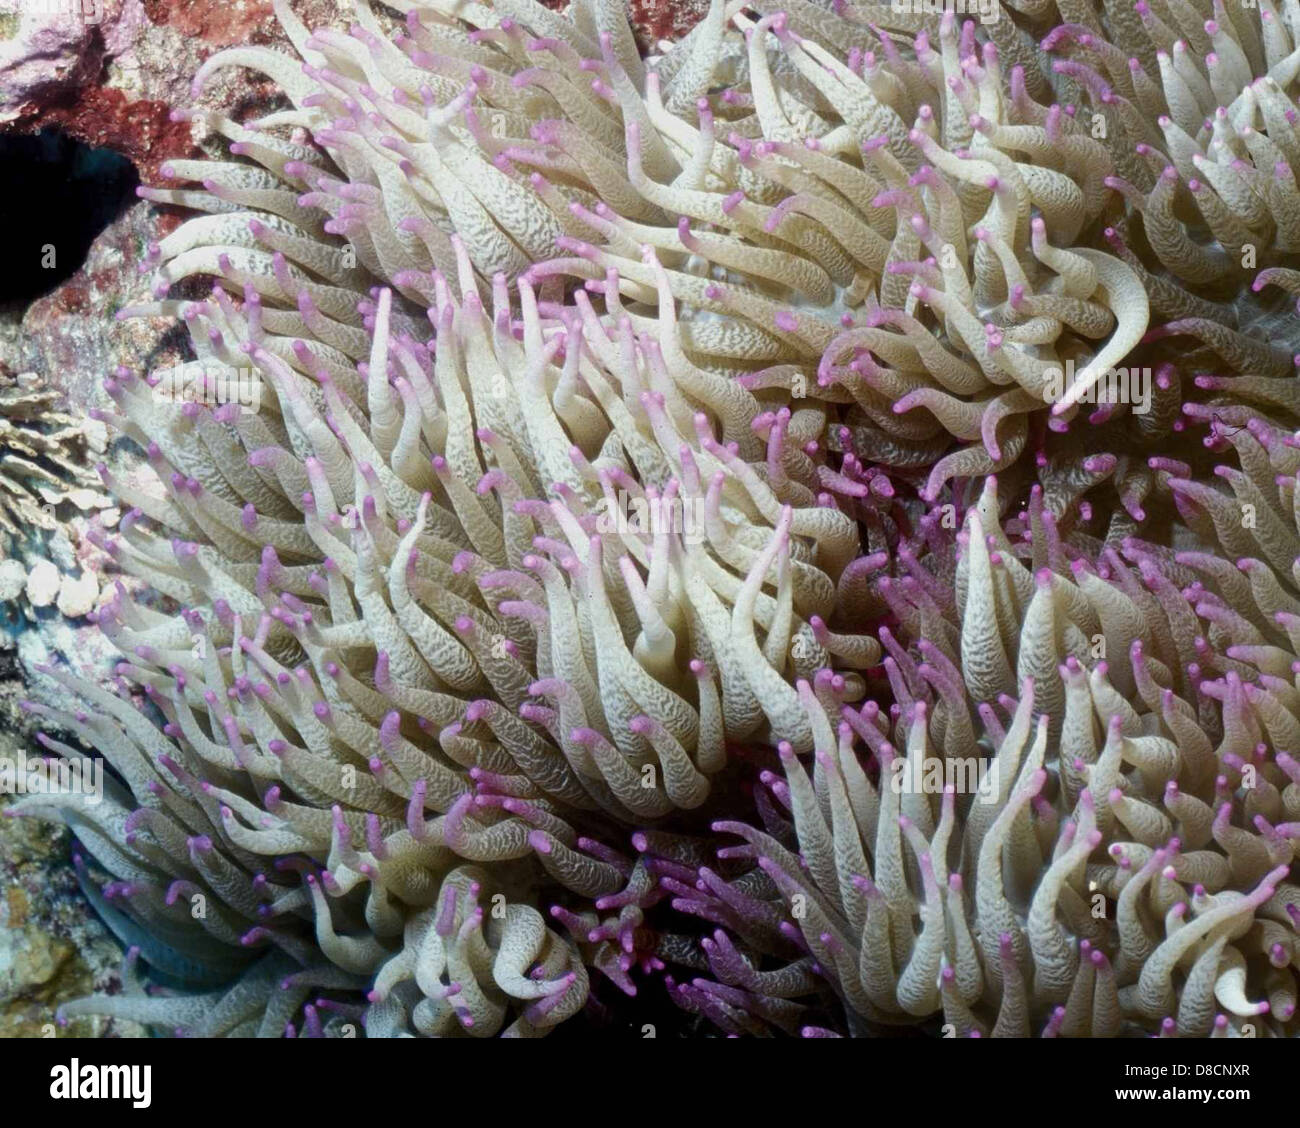 Heteractis malu a delicate sea anemone waves its long purple tipped tentacle. Stock Photo